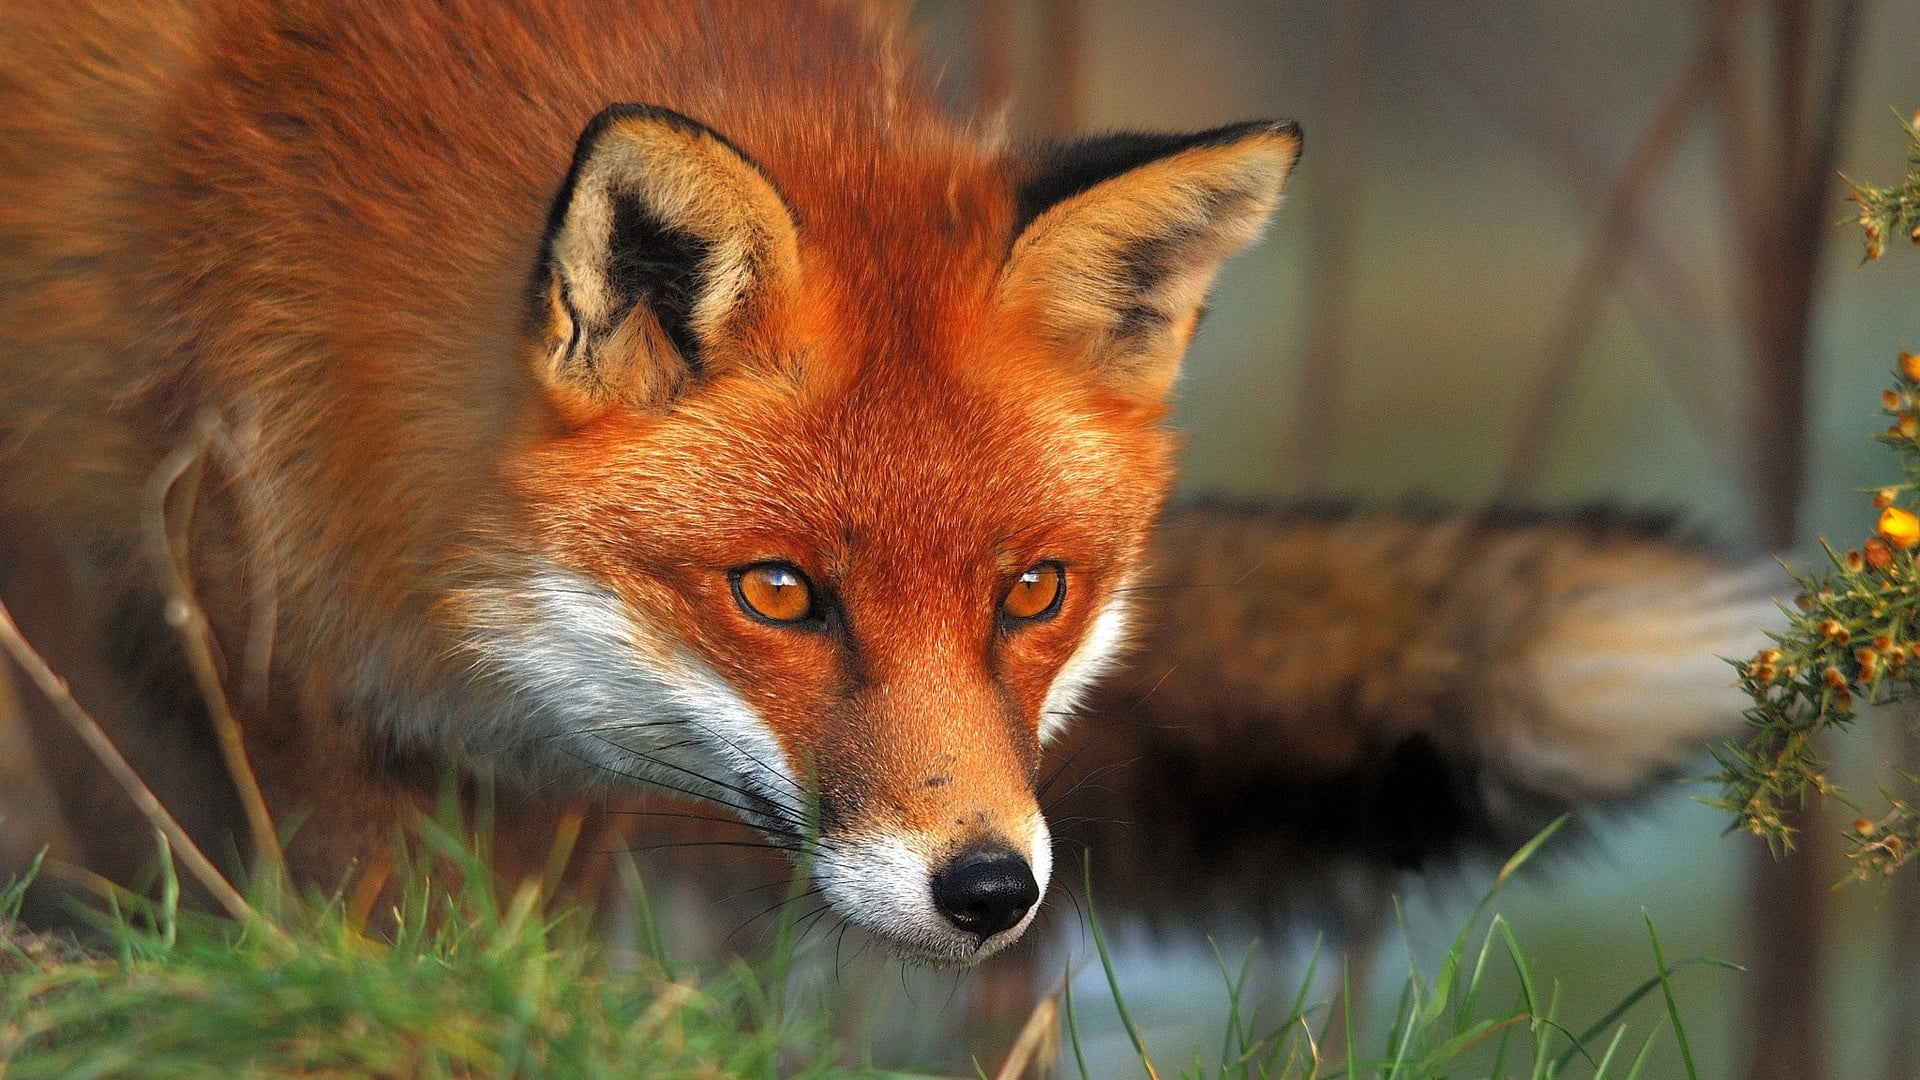 red fox, face, eyes, grass, animal, wildlife, animals In The Wild